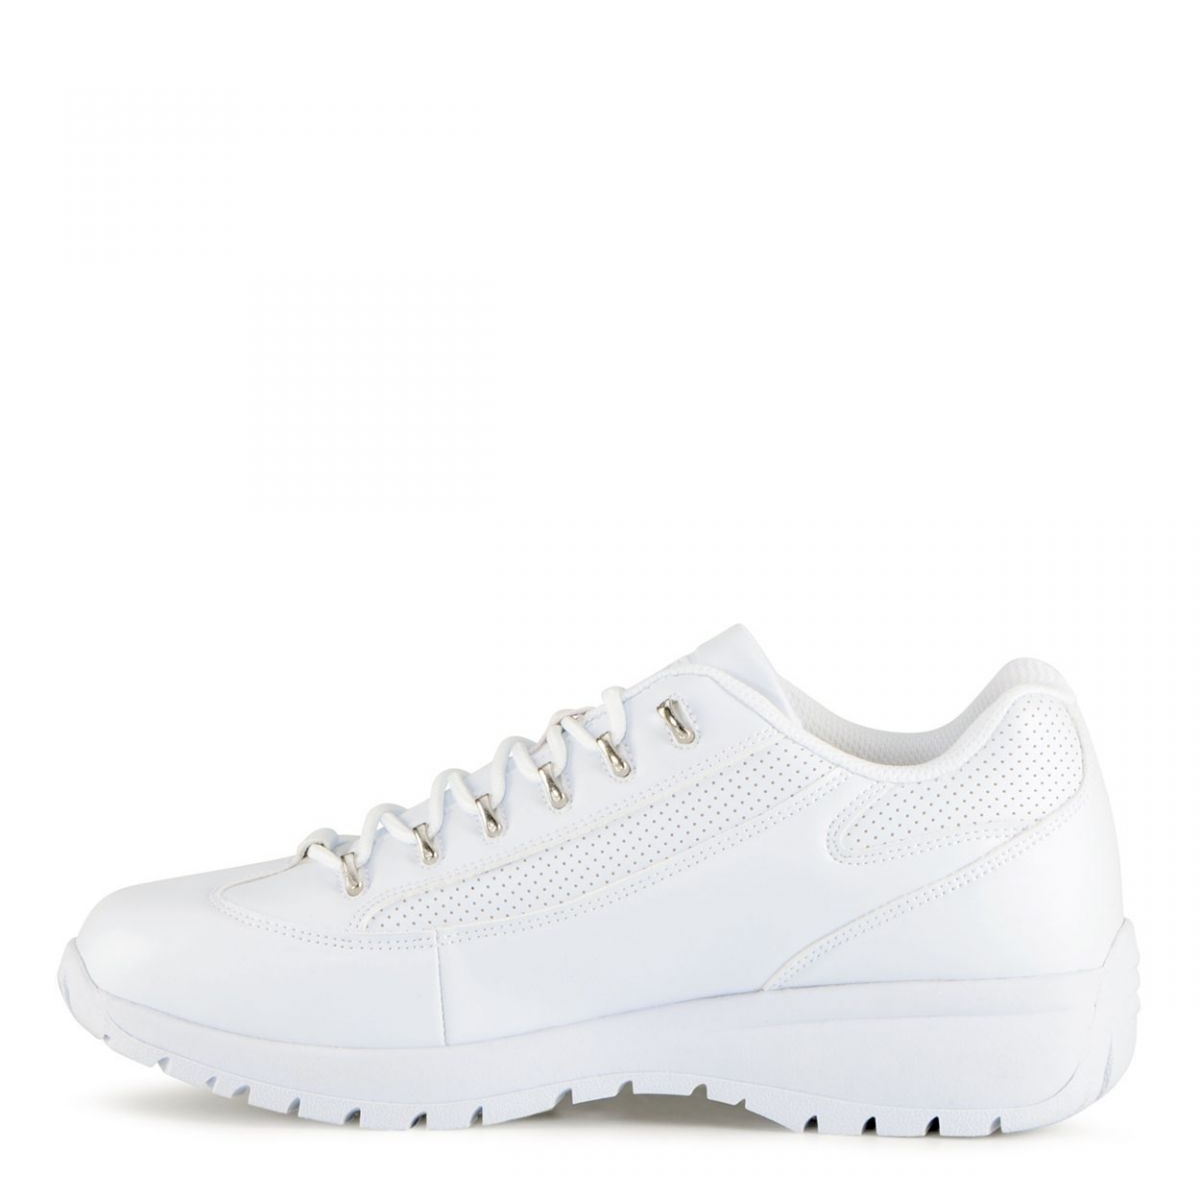 Lugz Men's Express Sneaker White - MEXPRSPV-100 WHITE - WHITE, 10.5